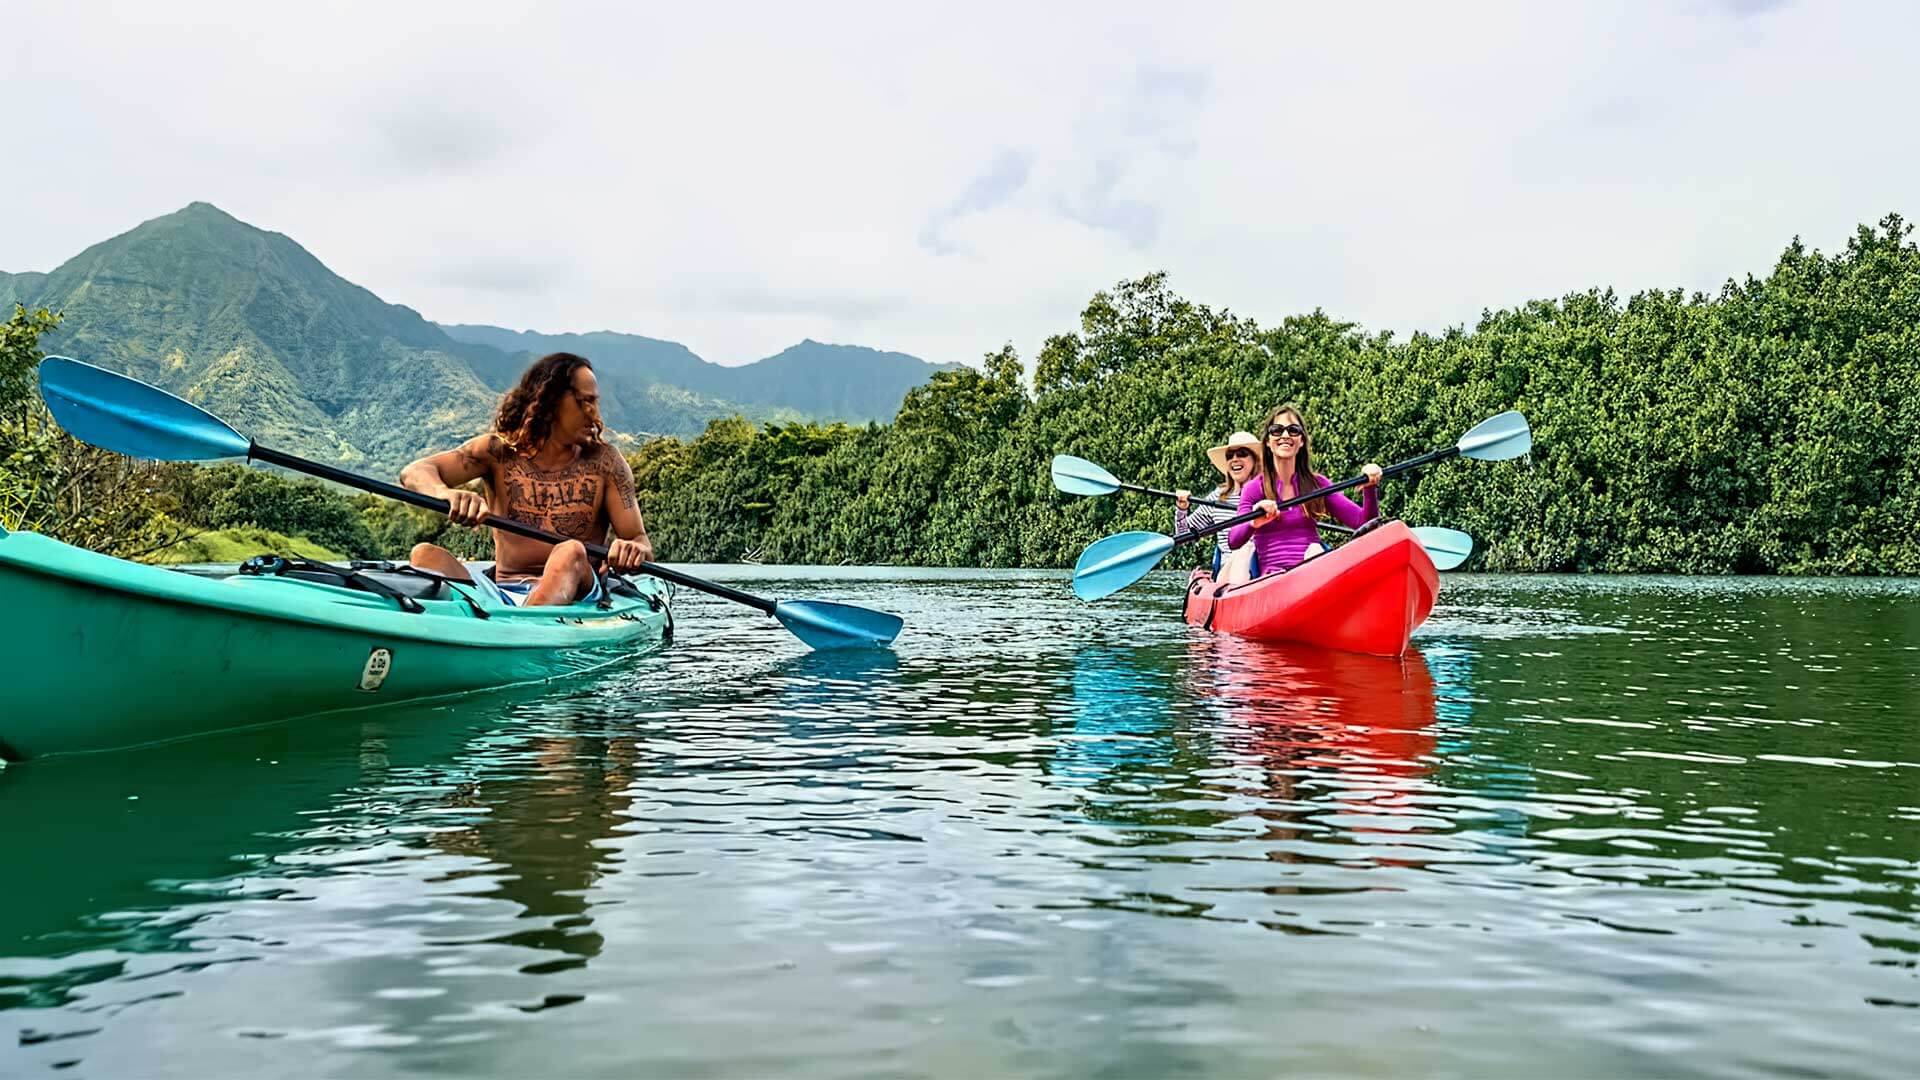 Kayak The Hanalei River - Kayak Hanalei